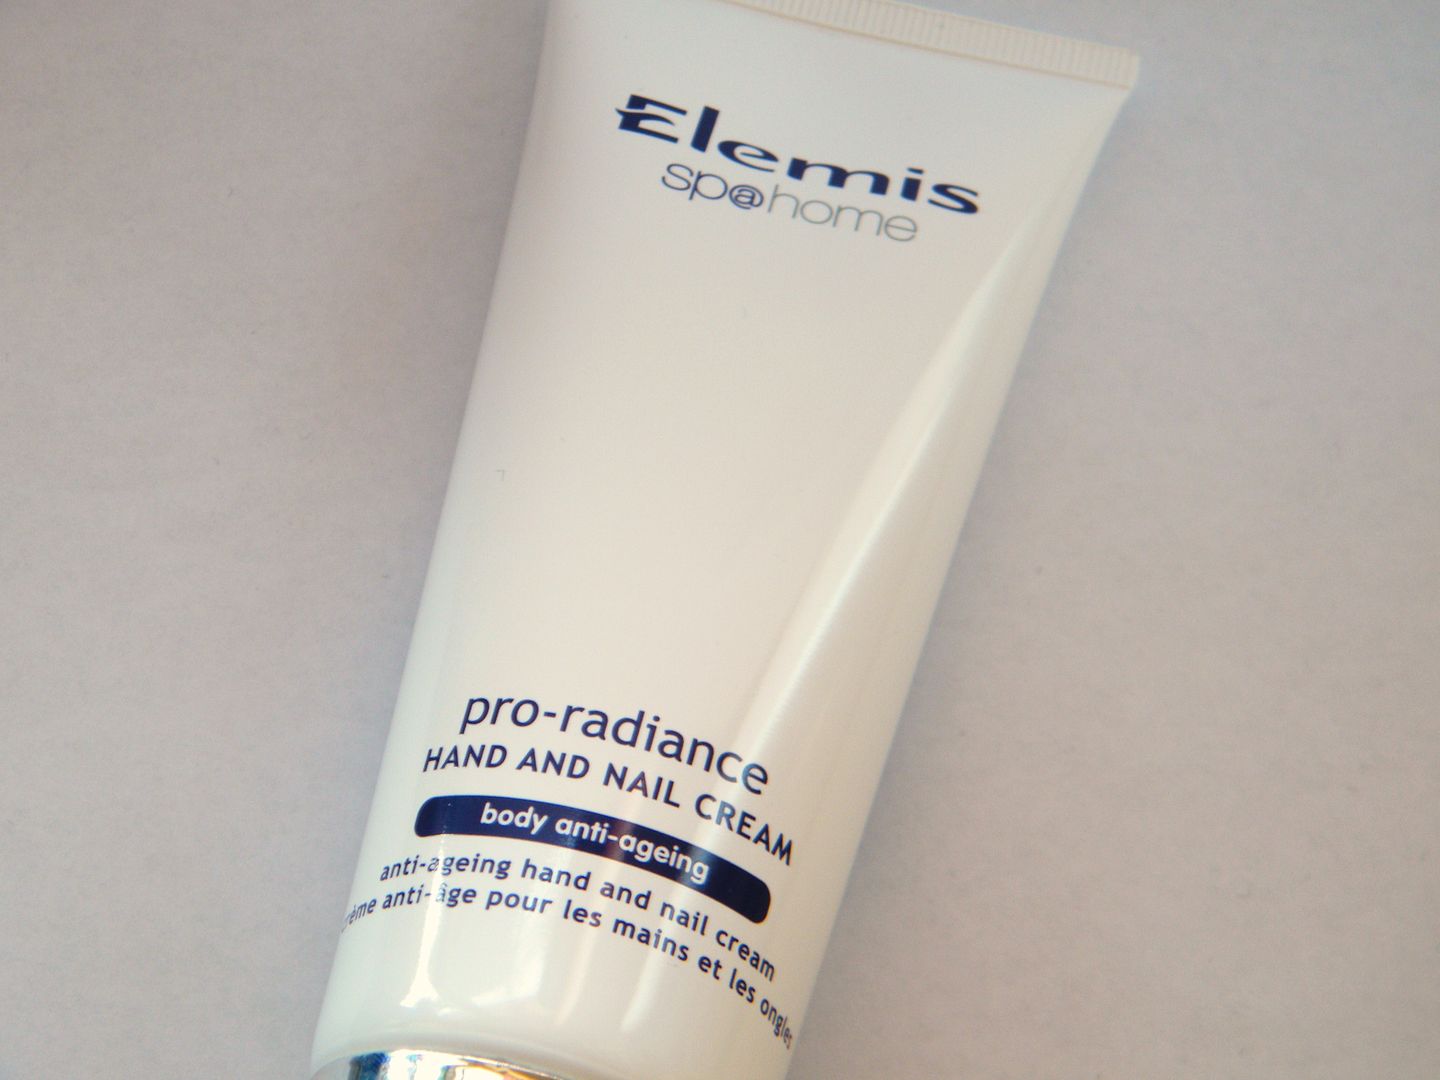 Elemis Pro-radiance Hand & Nail Cream